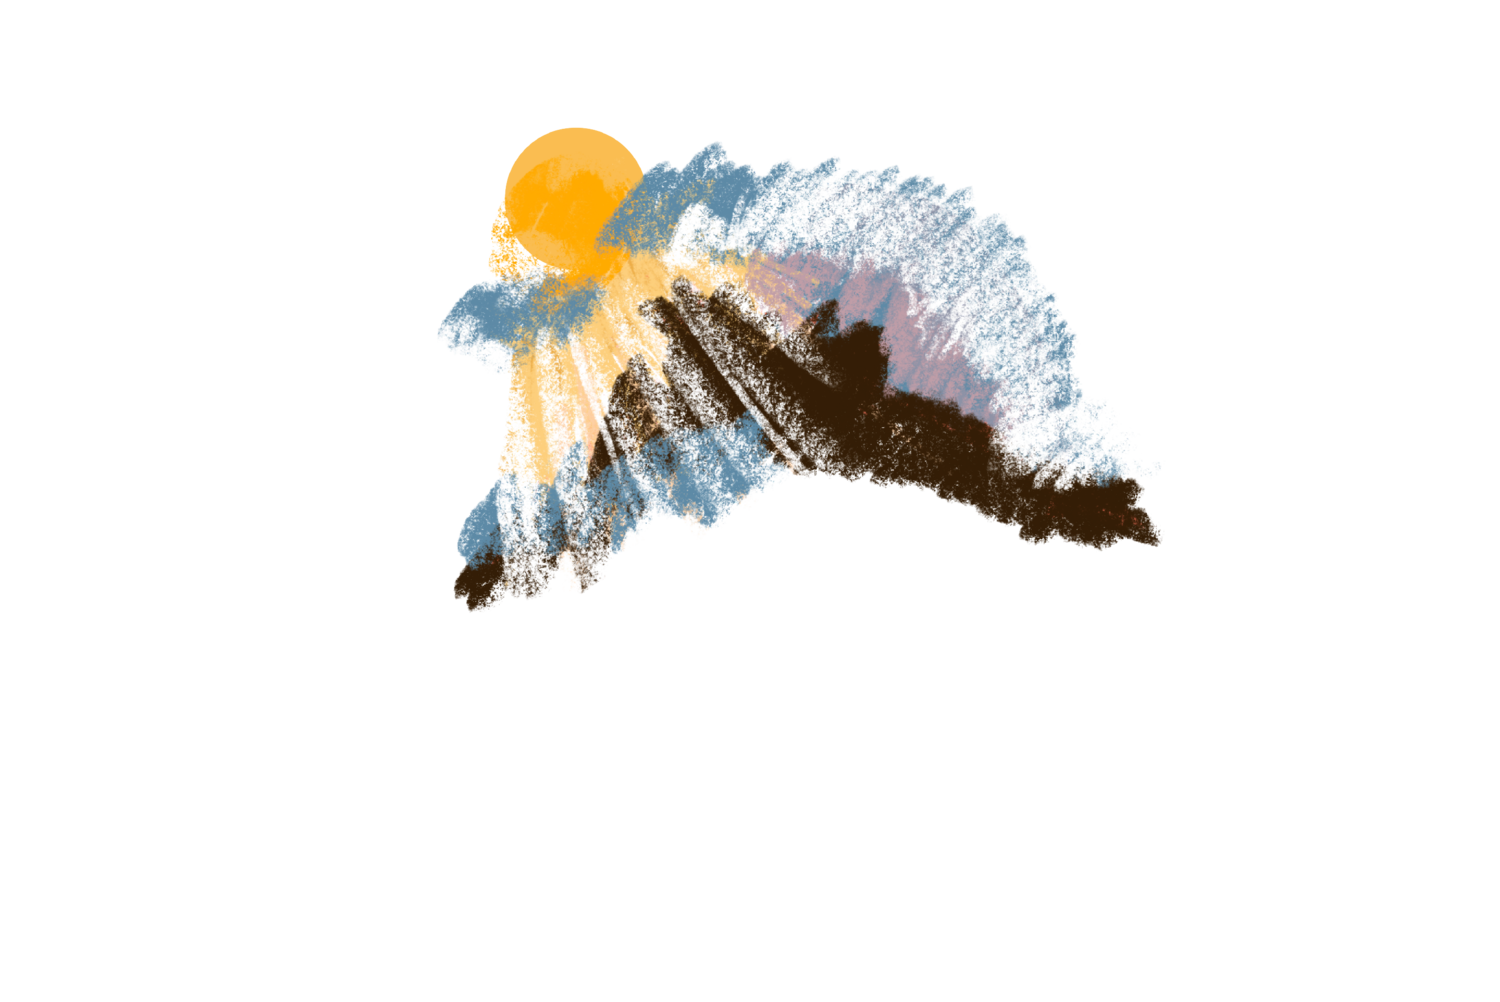 Aurora Midwifery